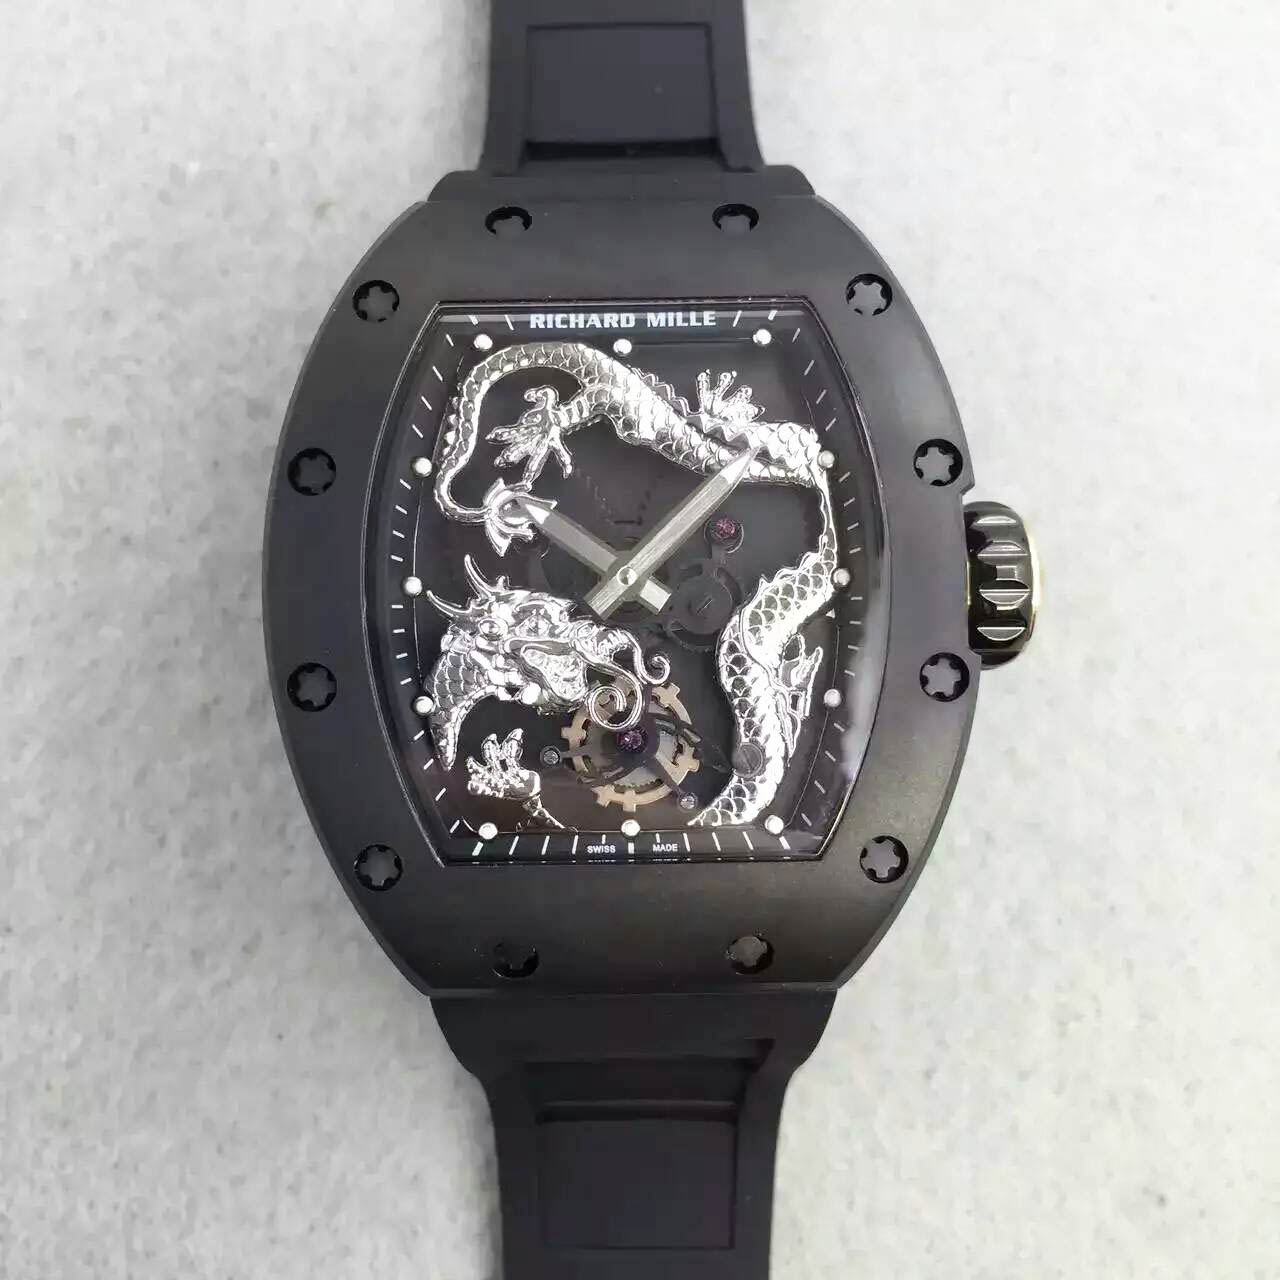 3A查理德米勒 Richard Mille 中國龍系列 熱門腕錶推薦 1:1手錶